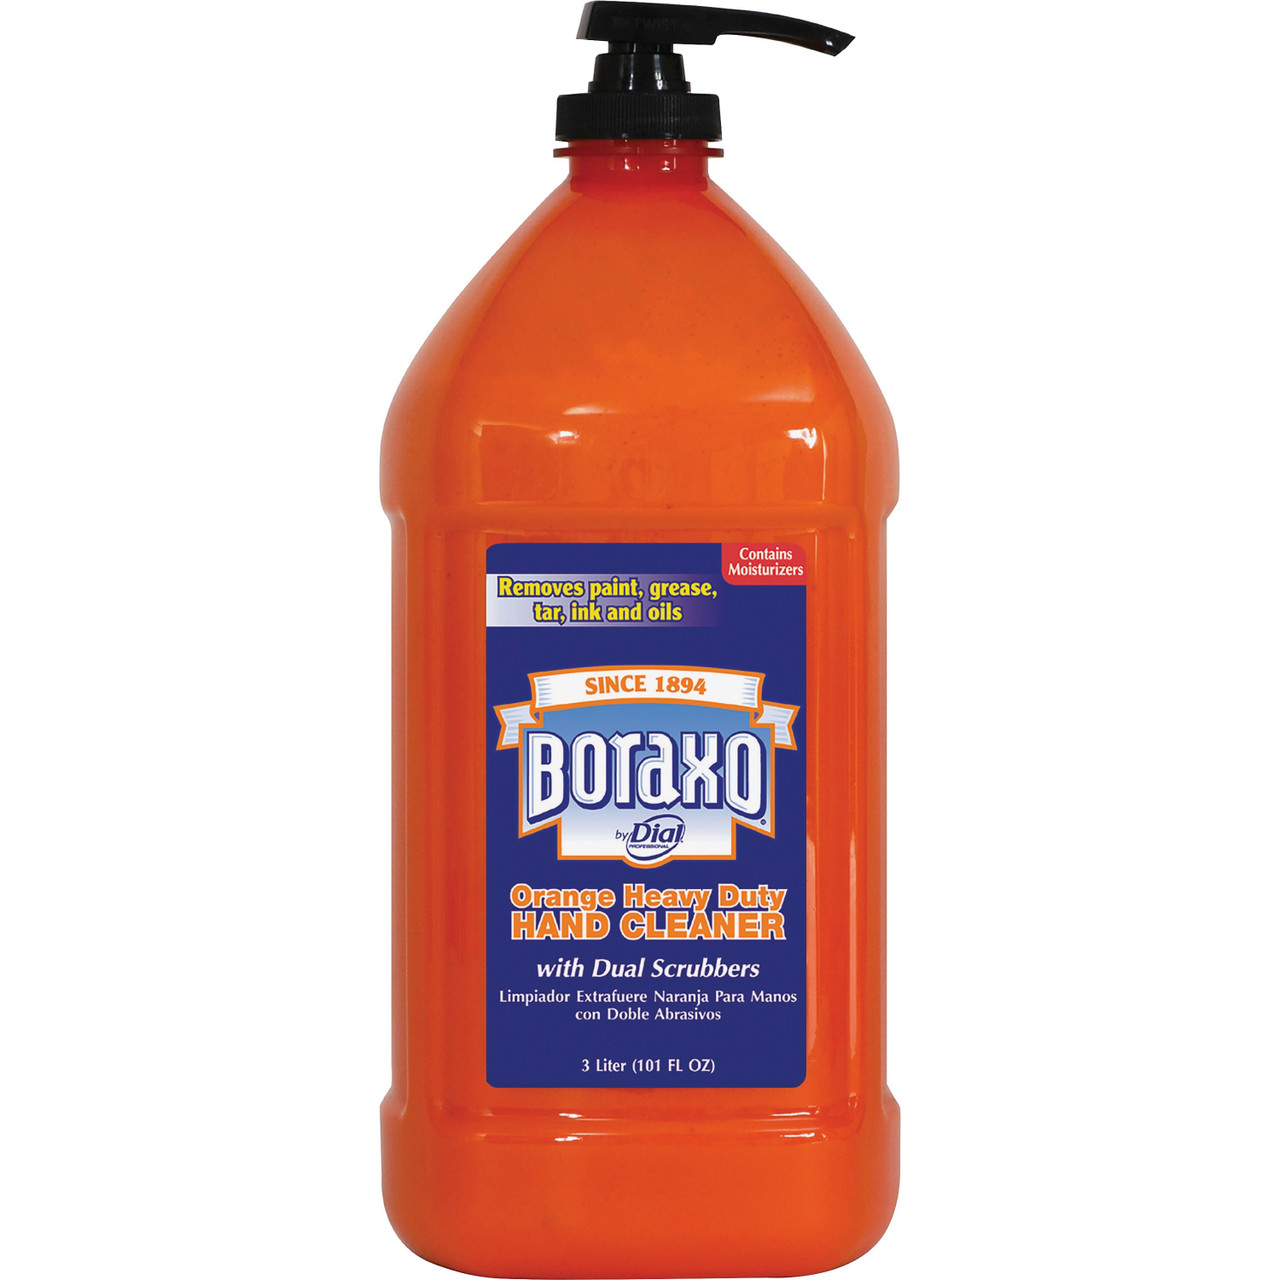 Gojo 095504 Natural Orange Pumice Hand Cleaner, 4 Pump Bottles 